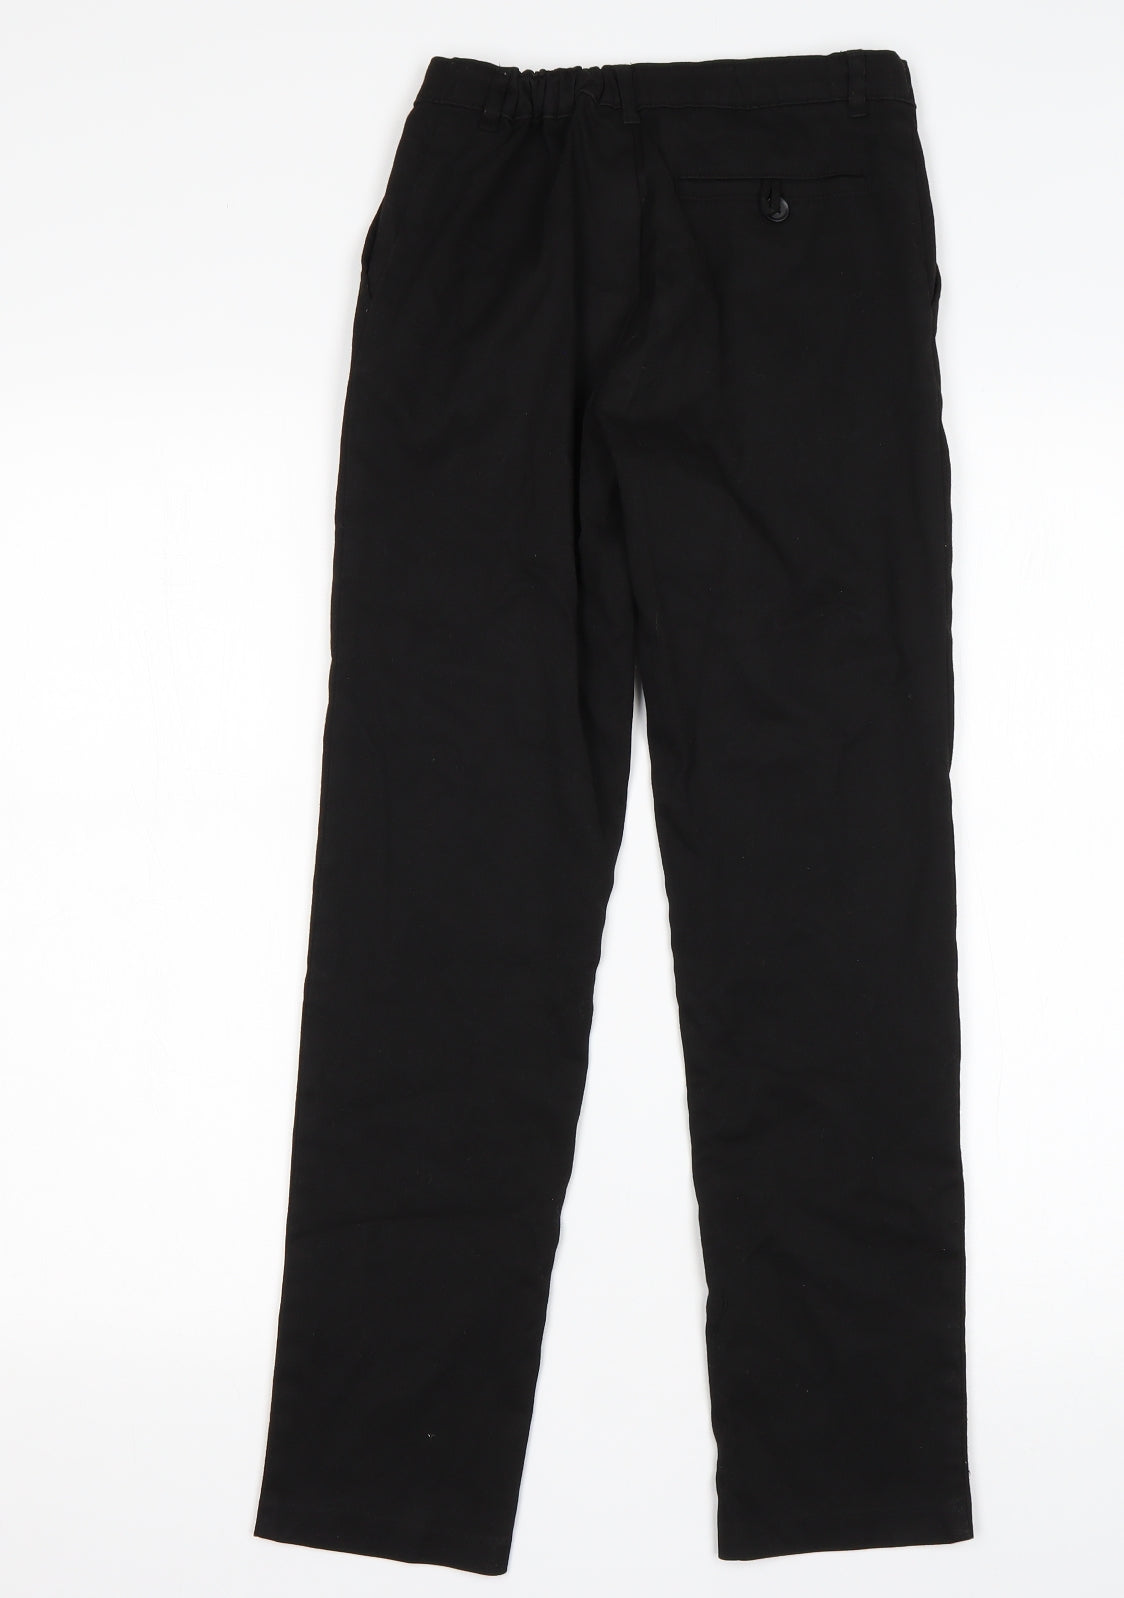 George Boys Black  Polyester Dress Pants Trousers Size 11-12 Years  Regular  - School wear